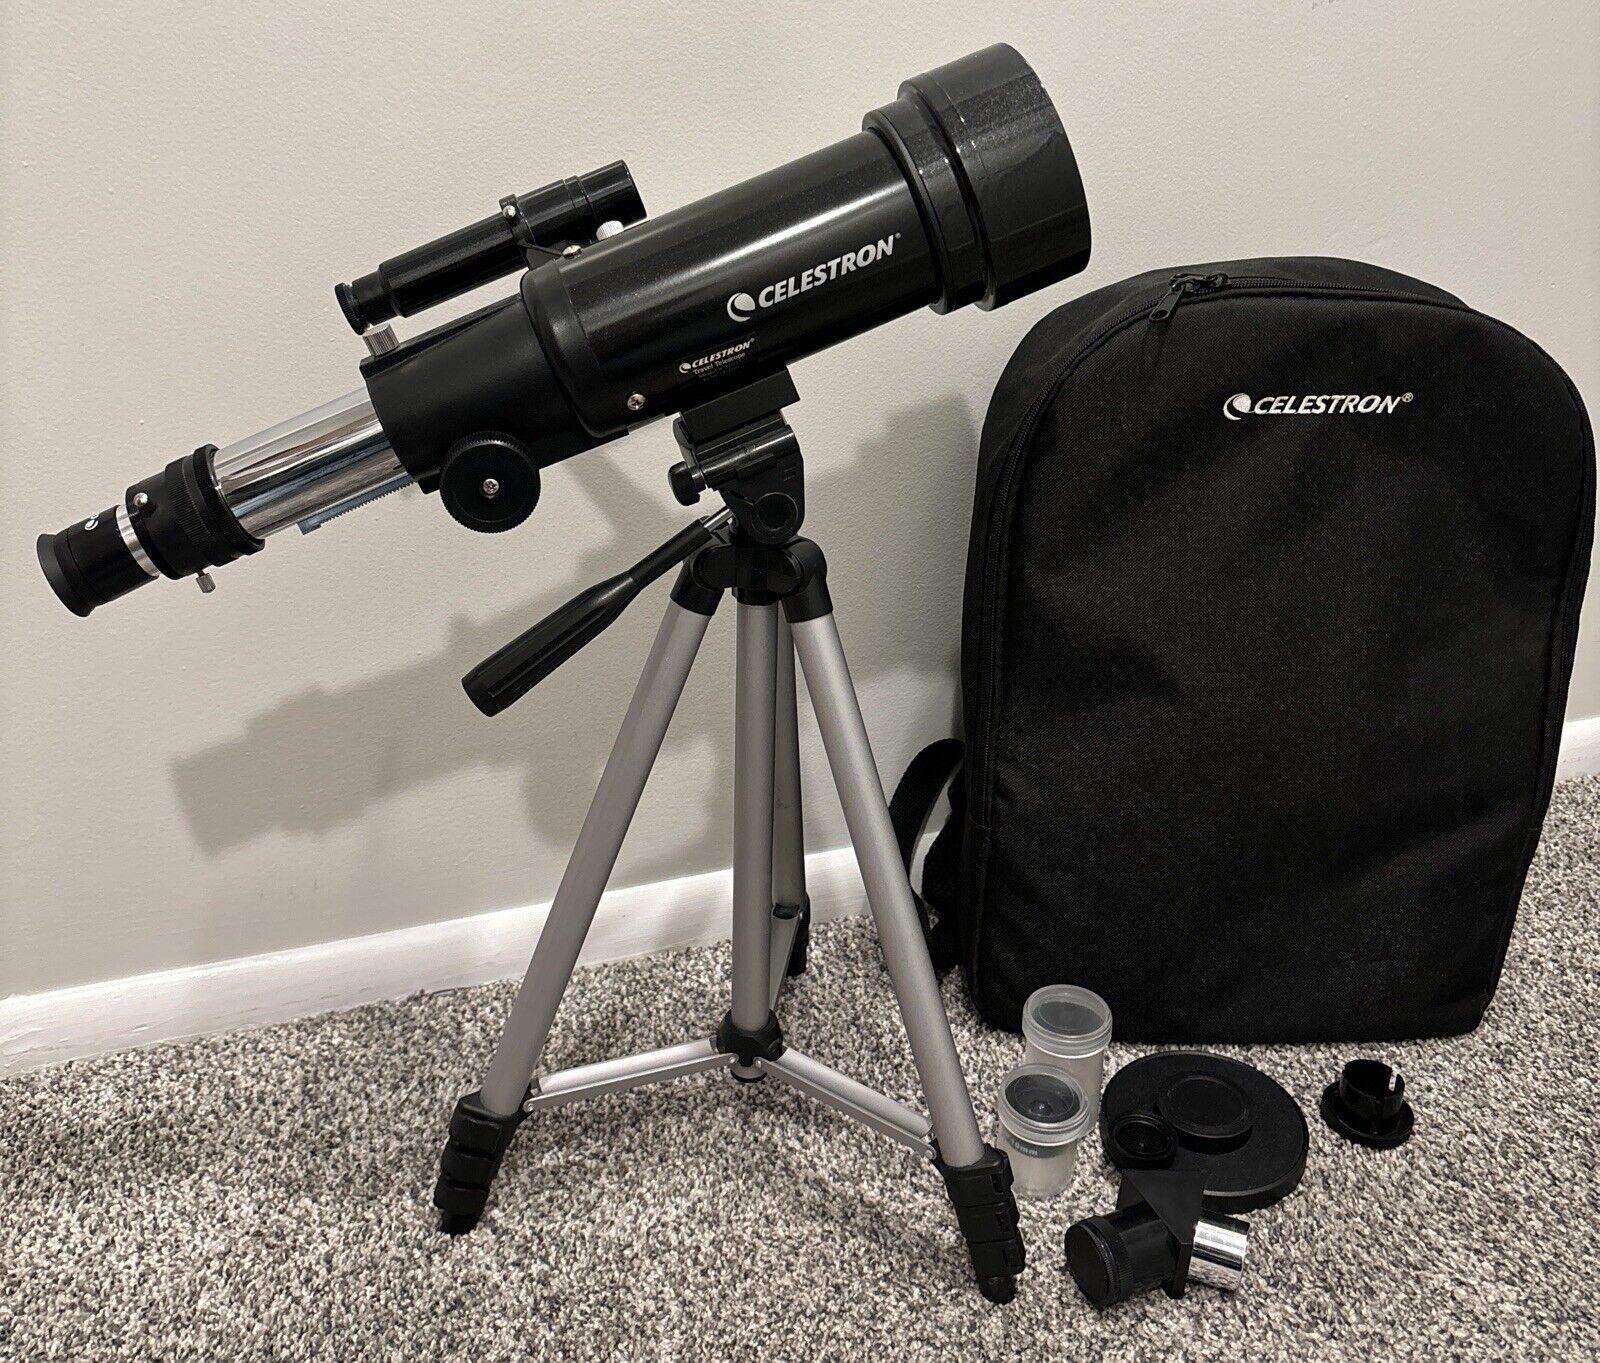 Celestron Travel Scope 70 21035 Black Portable Telescope With Accessories ✨